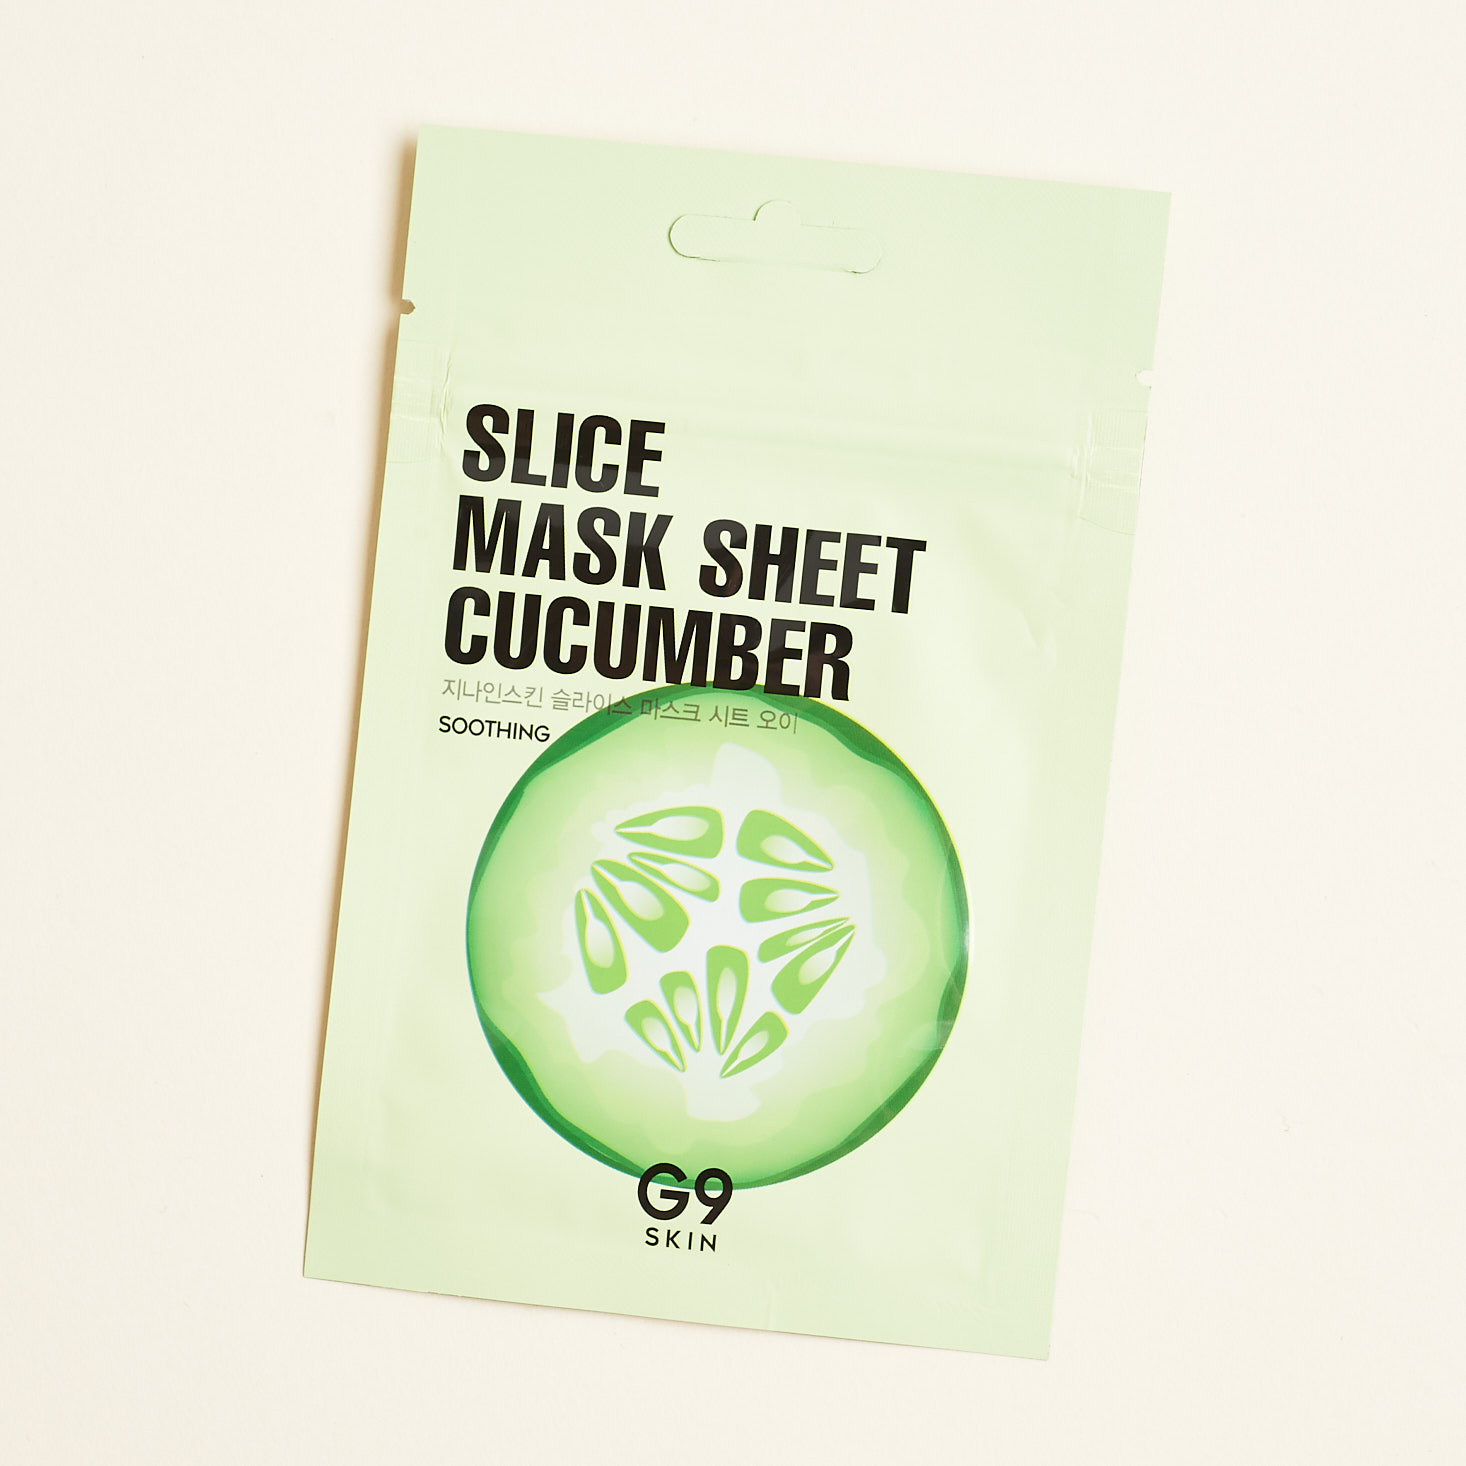 cucumber slice masks